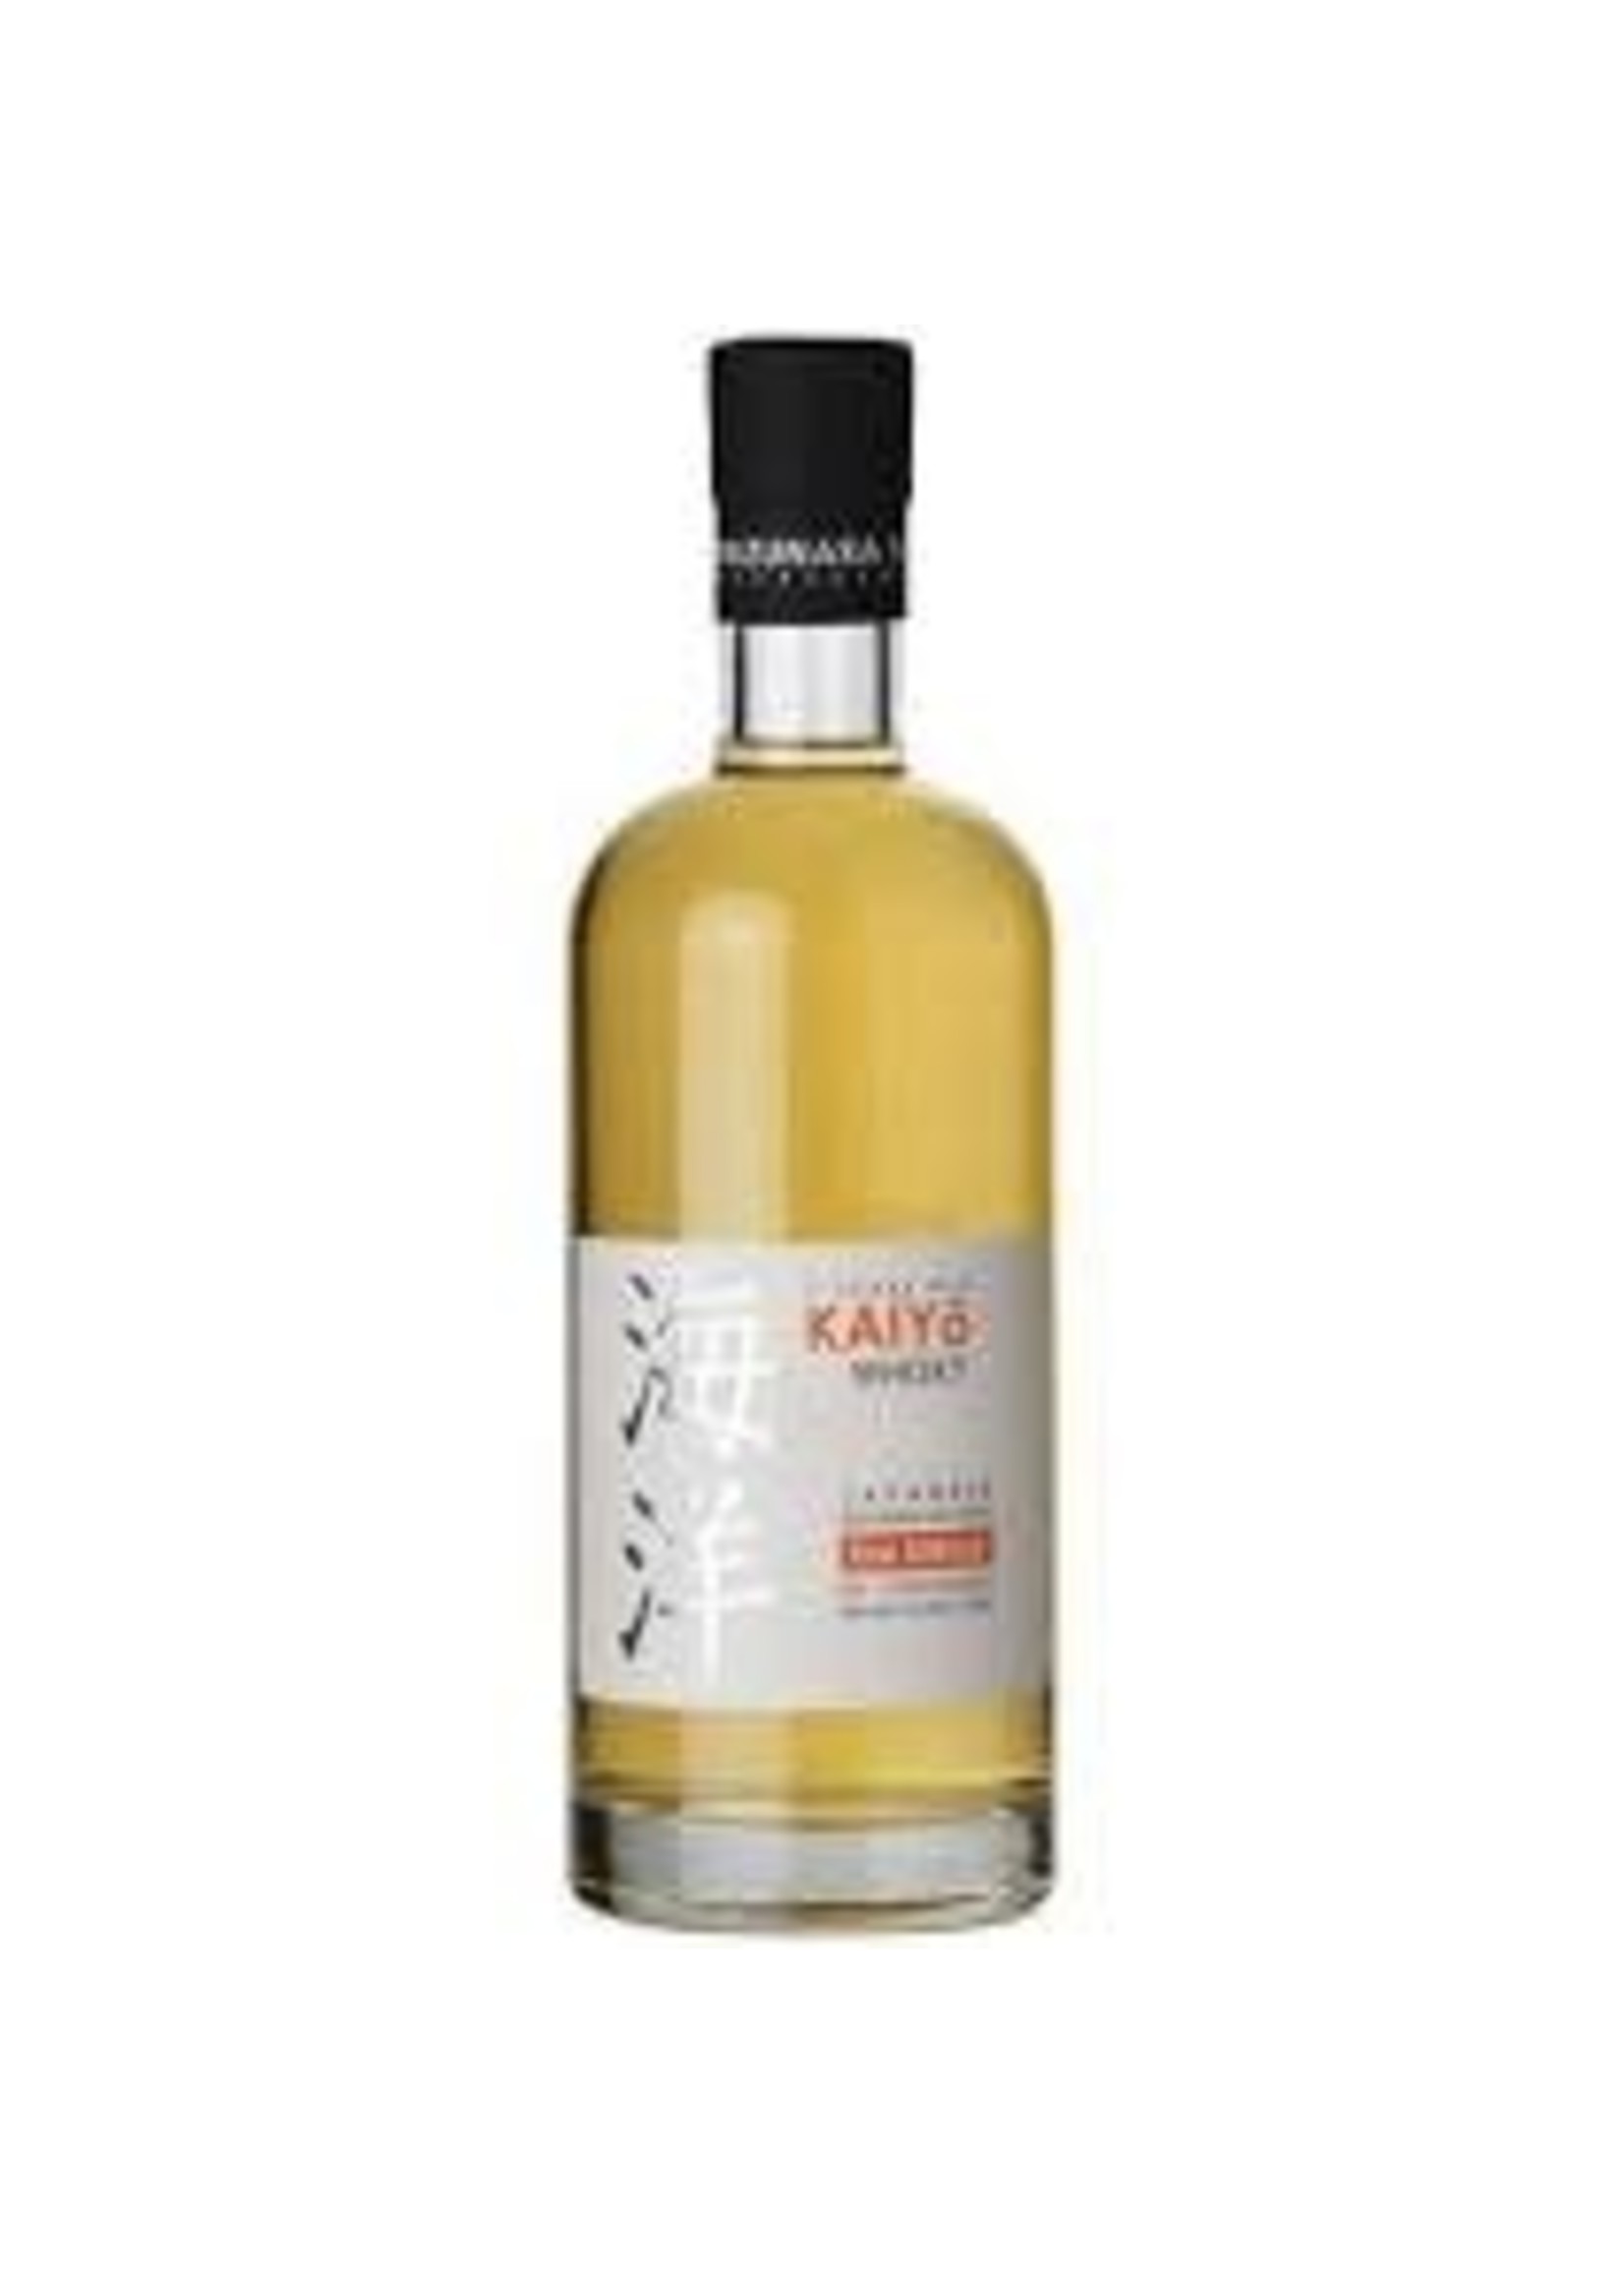 Kaiyo Japanese Whisky 'The Single' 7 Year Old 750ml